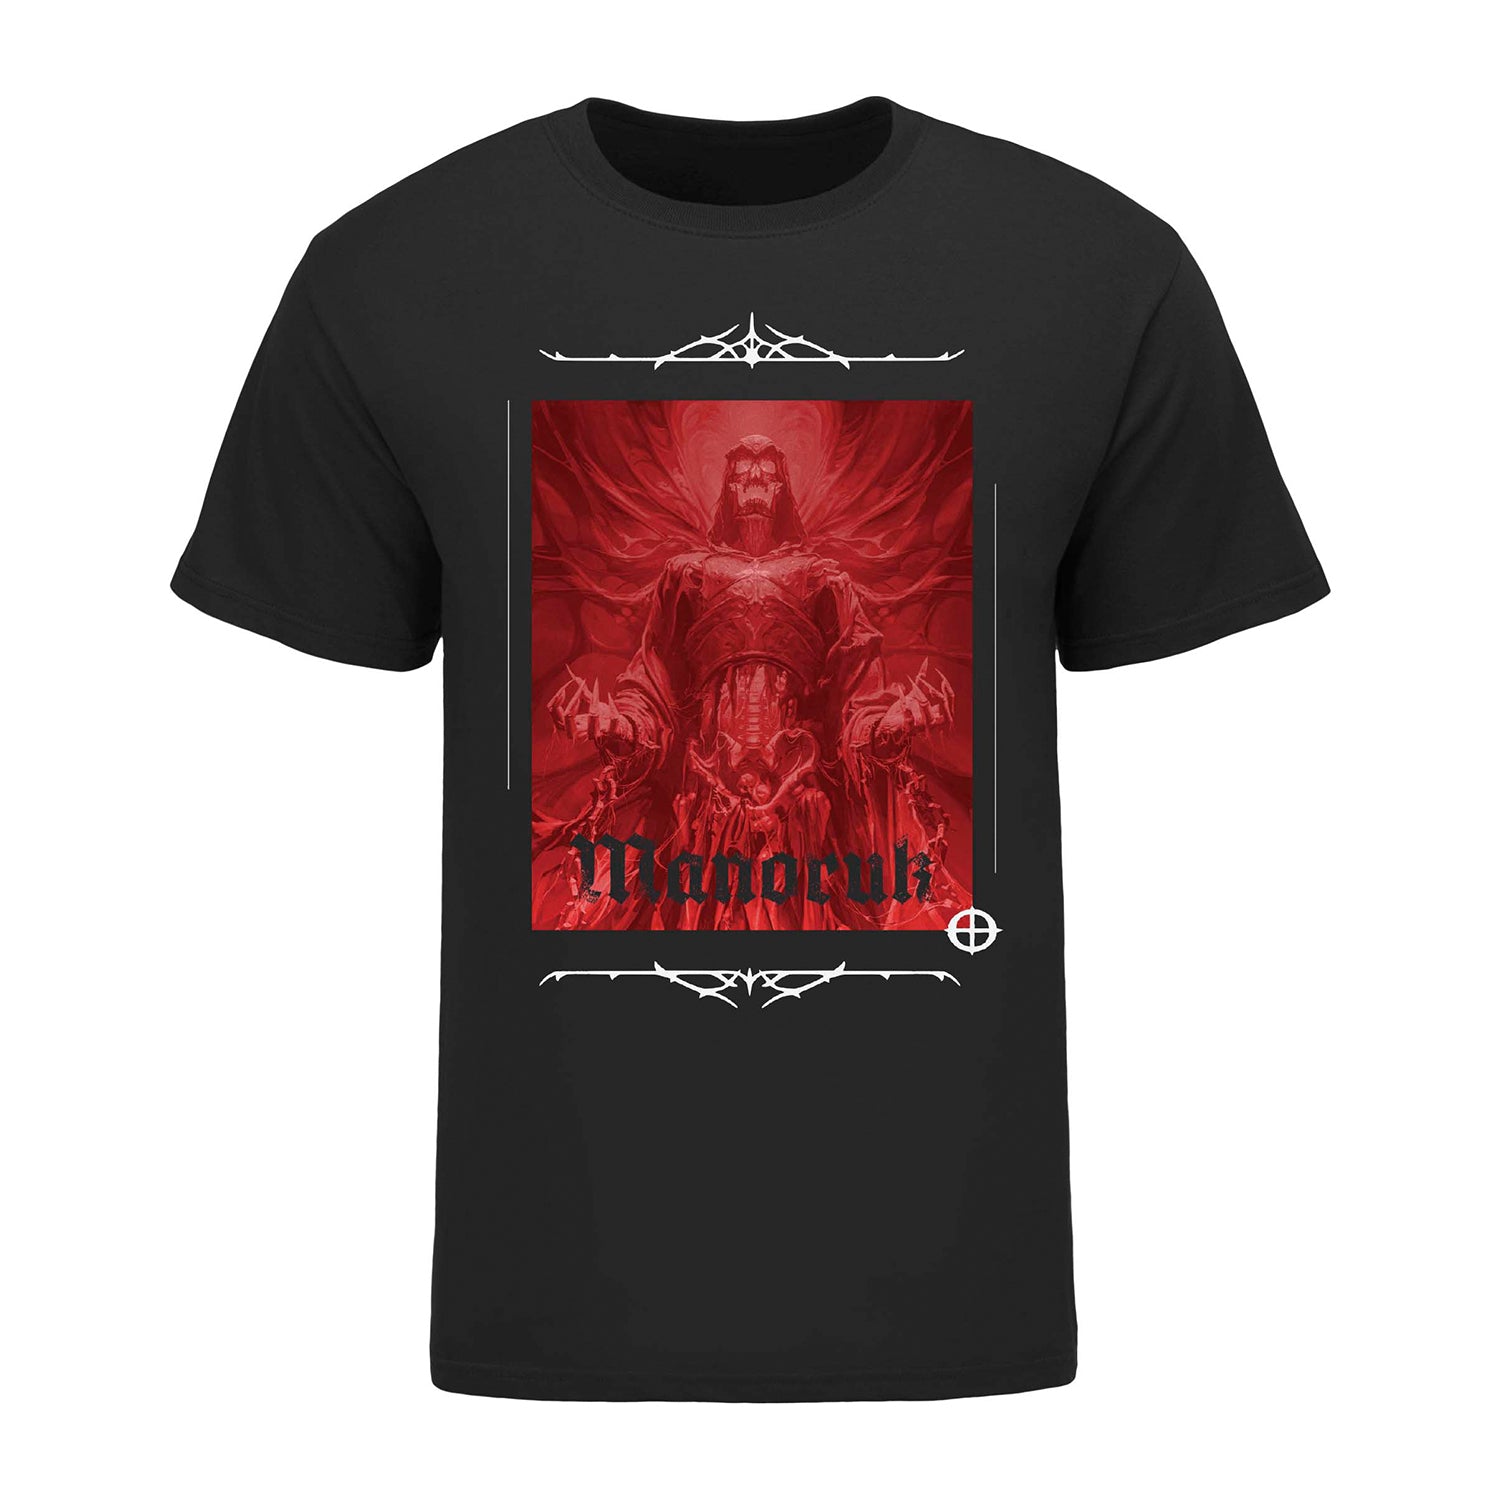 Diablo Immortal Manoruk Black T-Shirt - Front View